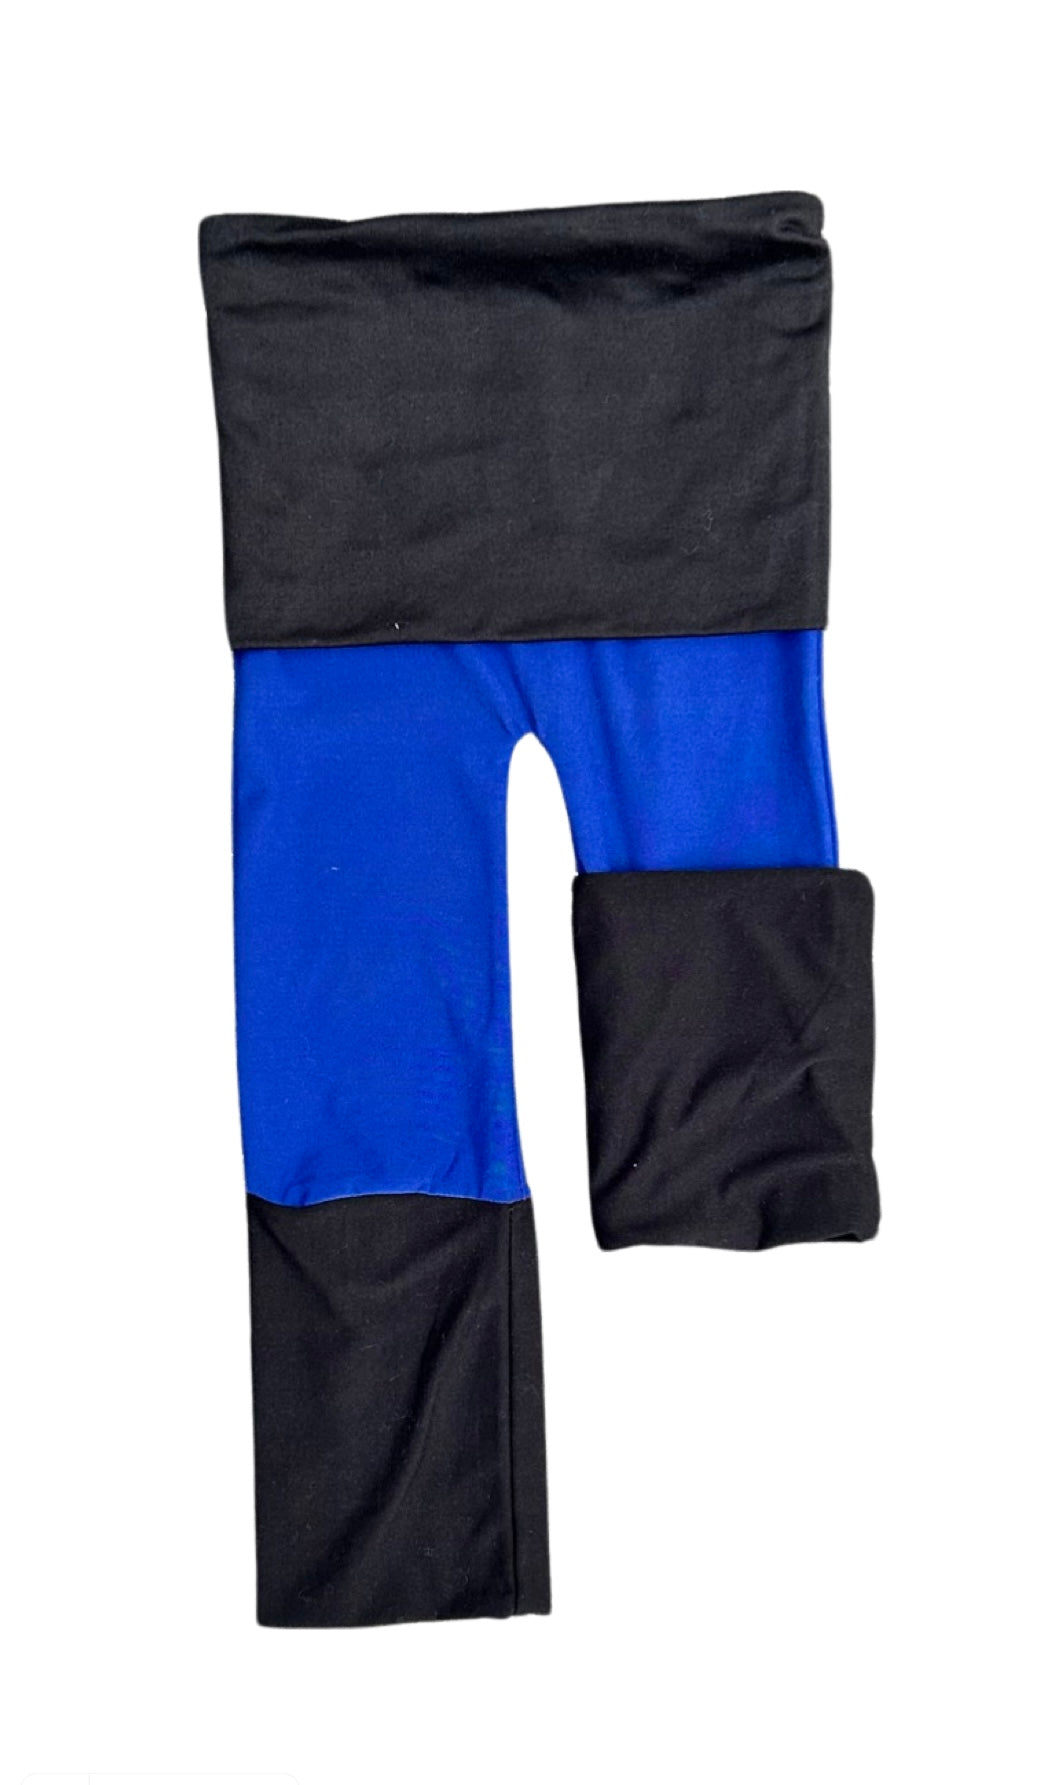 Adjustable Pants - Blue with Black